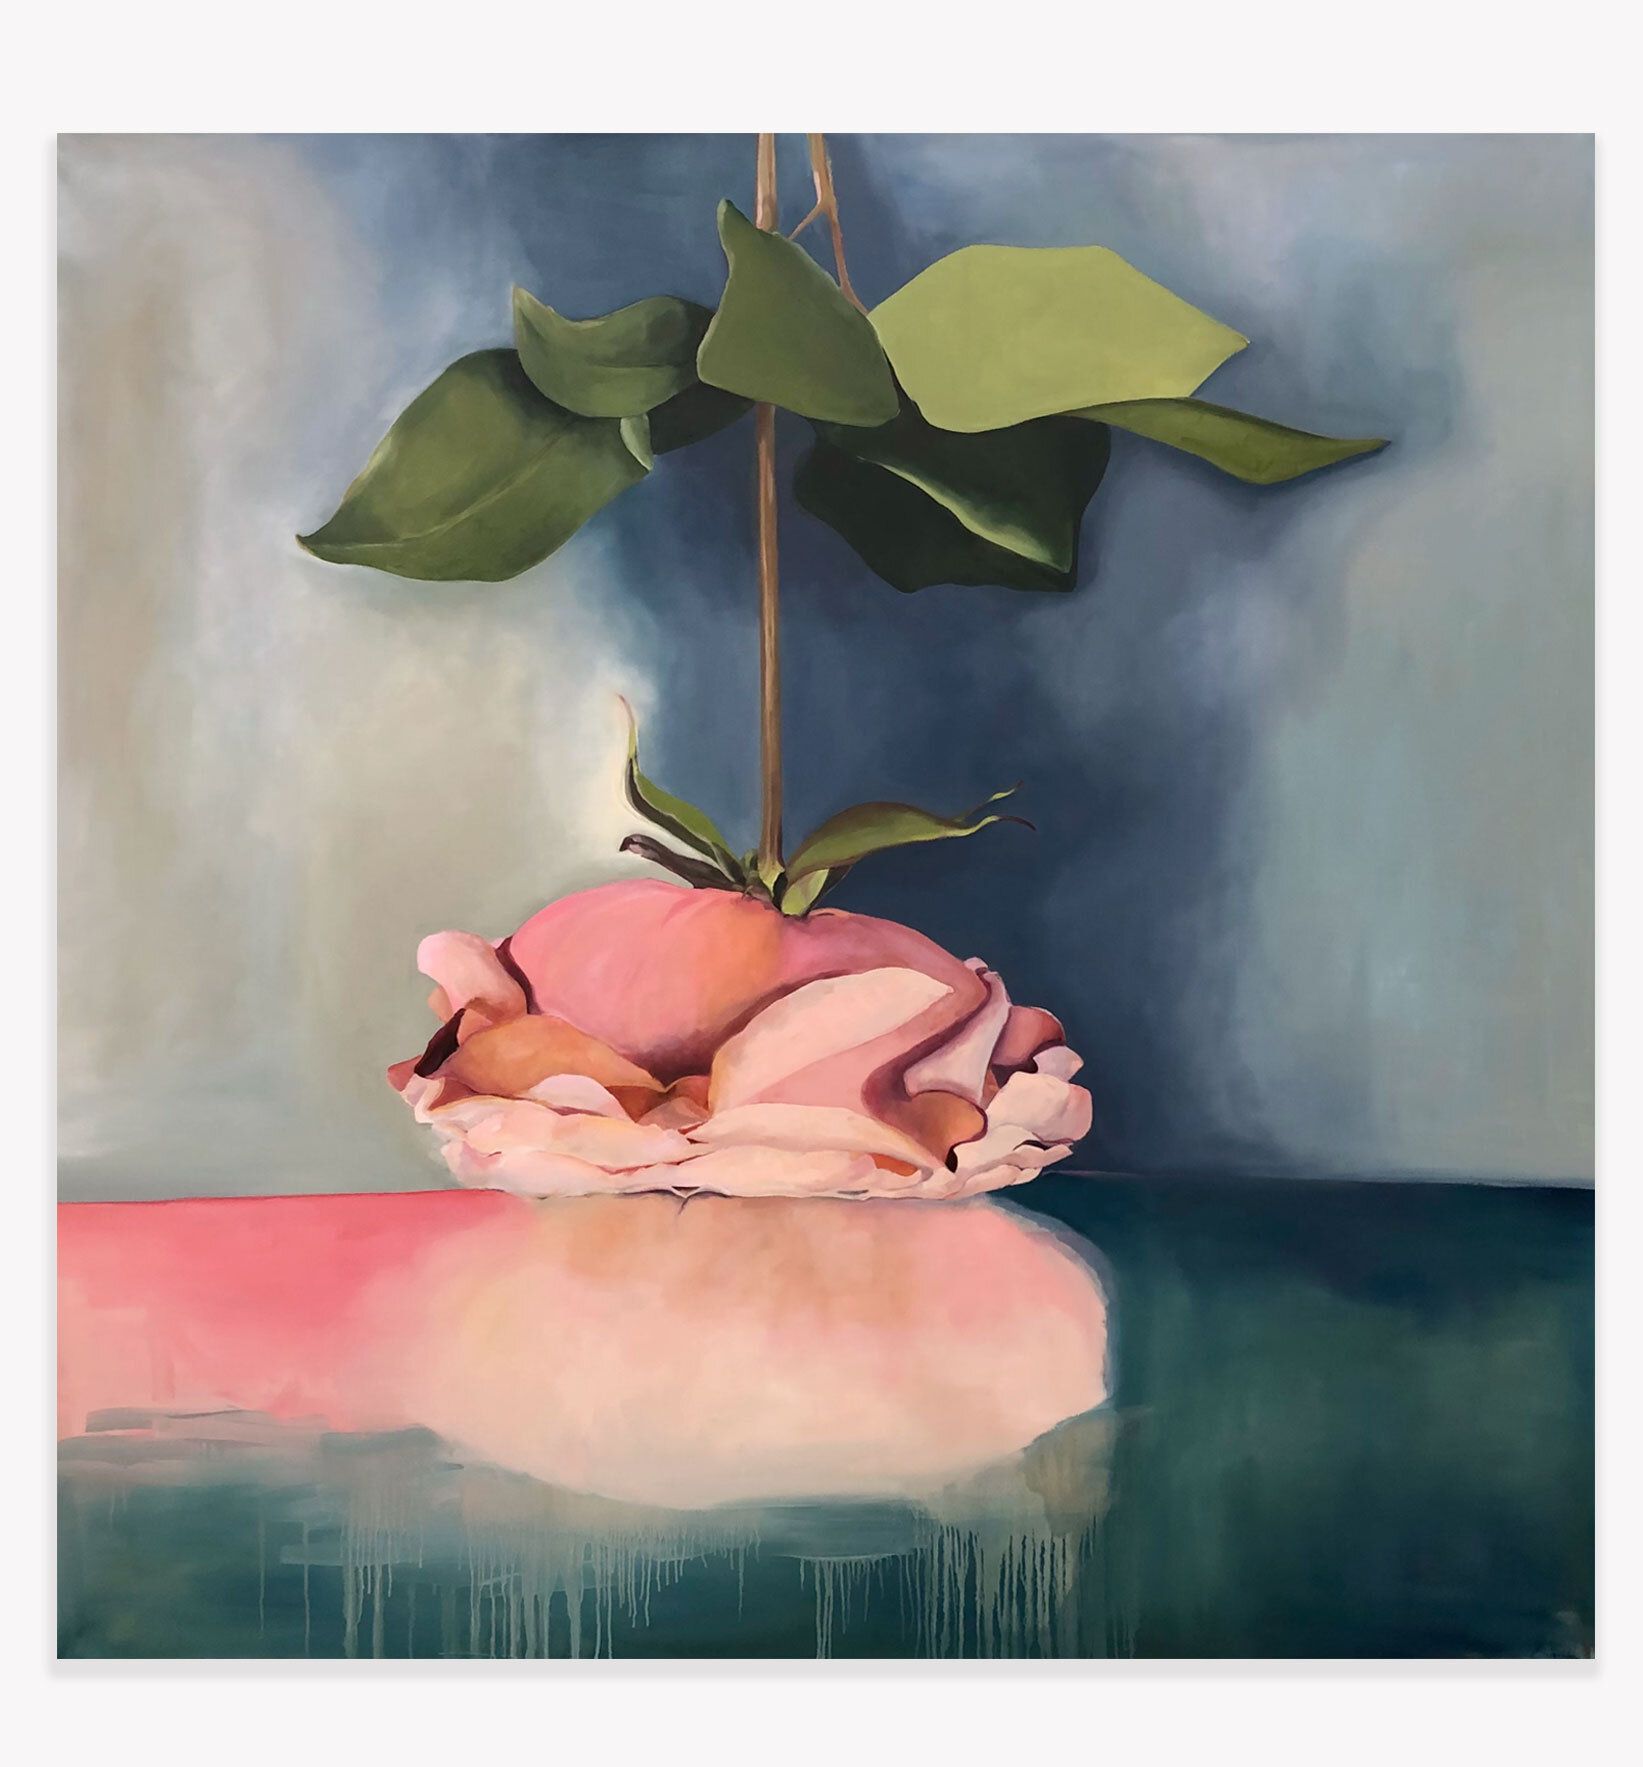   Buoyant Rose , Kristi Head 2021. Oil on canvas, 65 x 66 inches. 